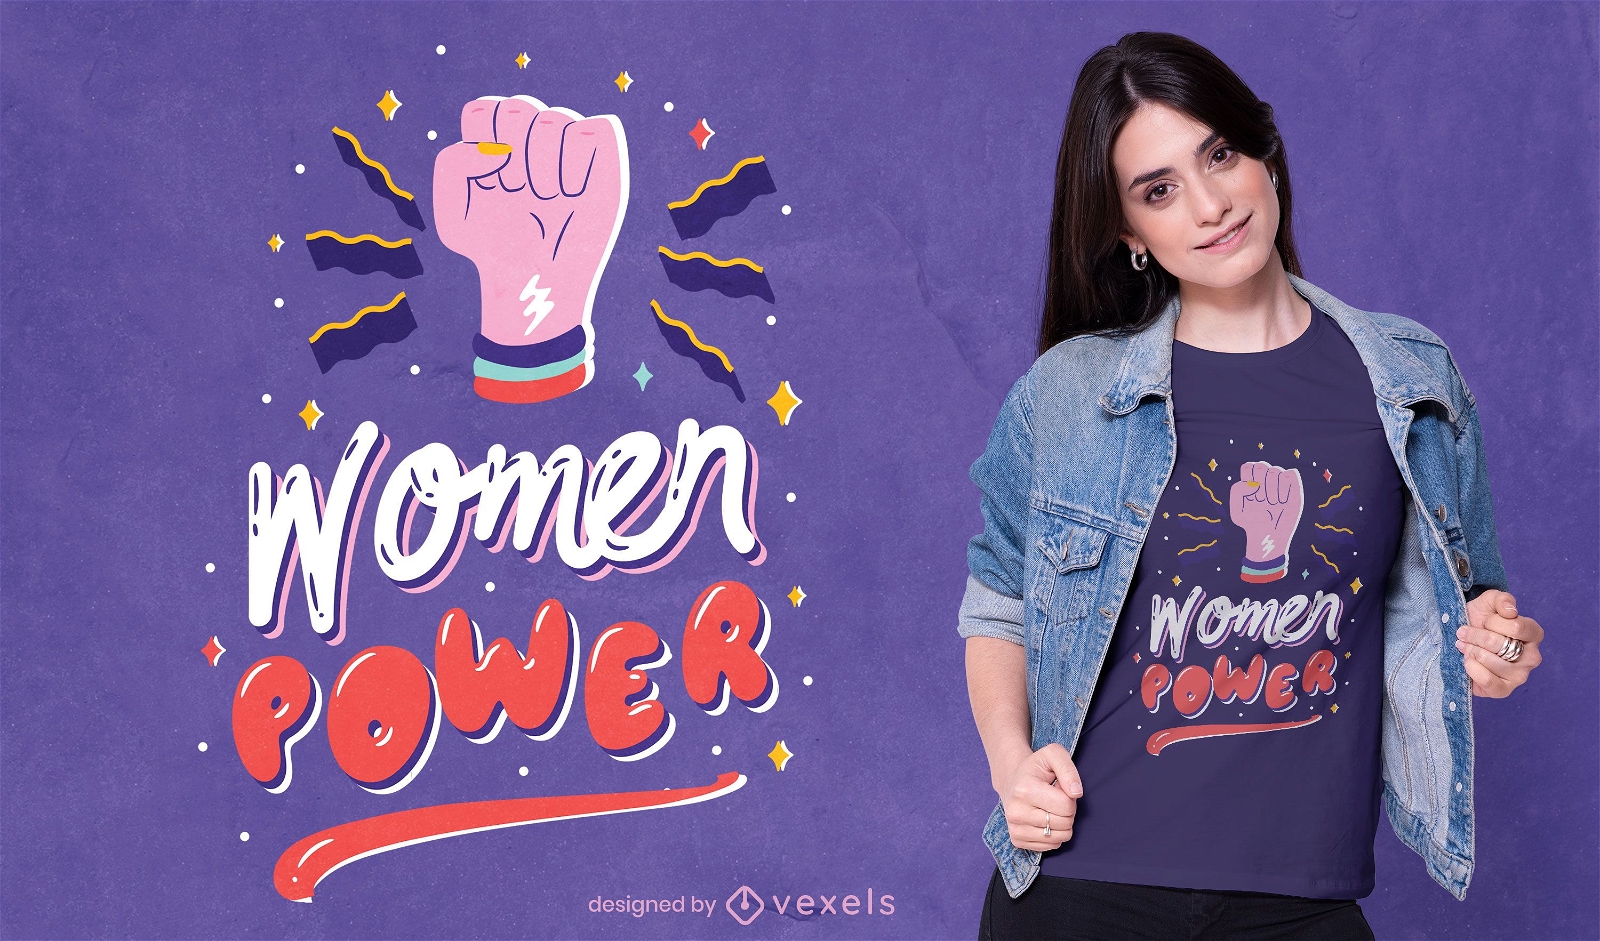 Dise?o de camiseta feminista de poder femenino.